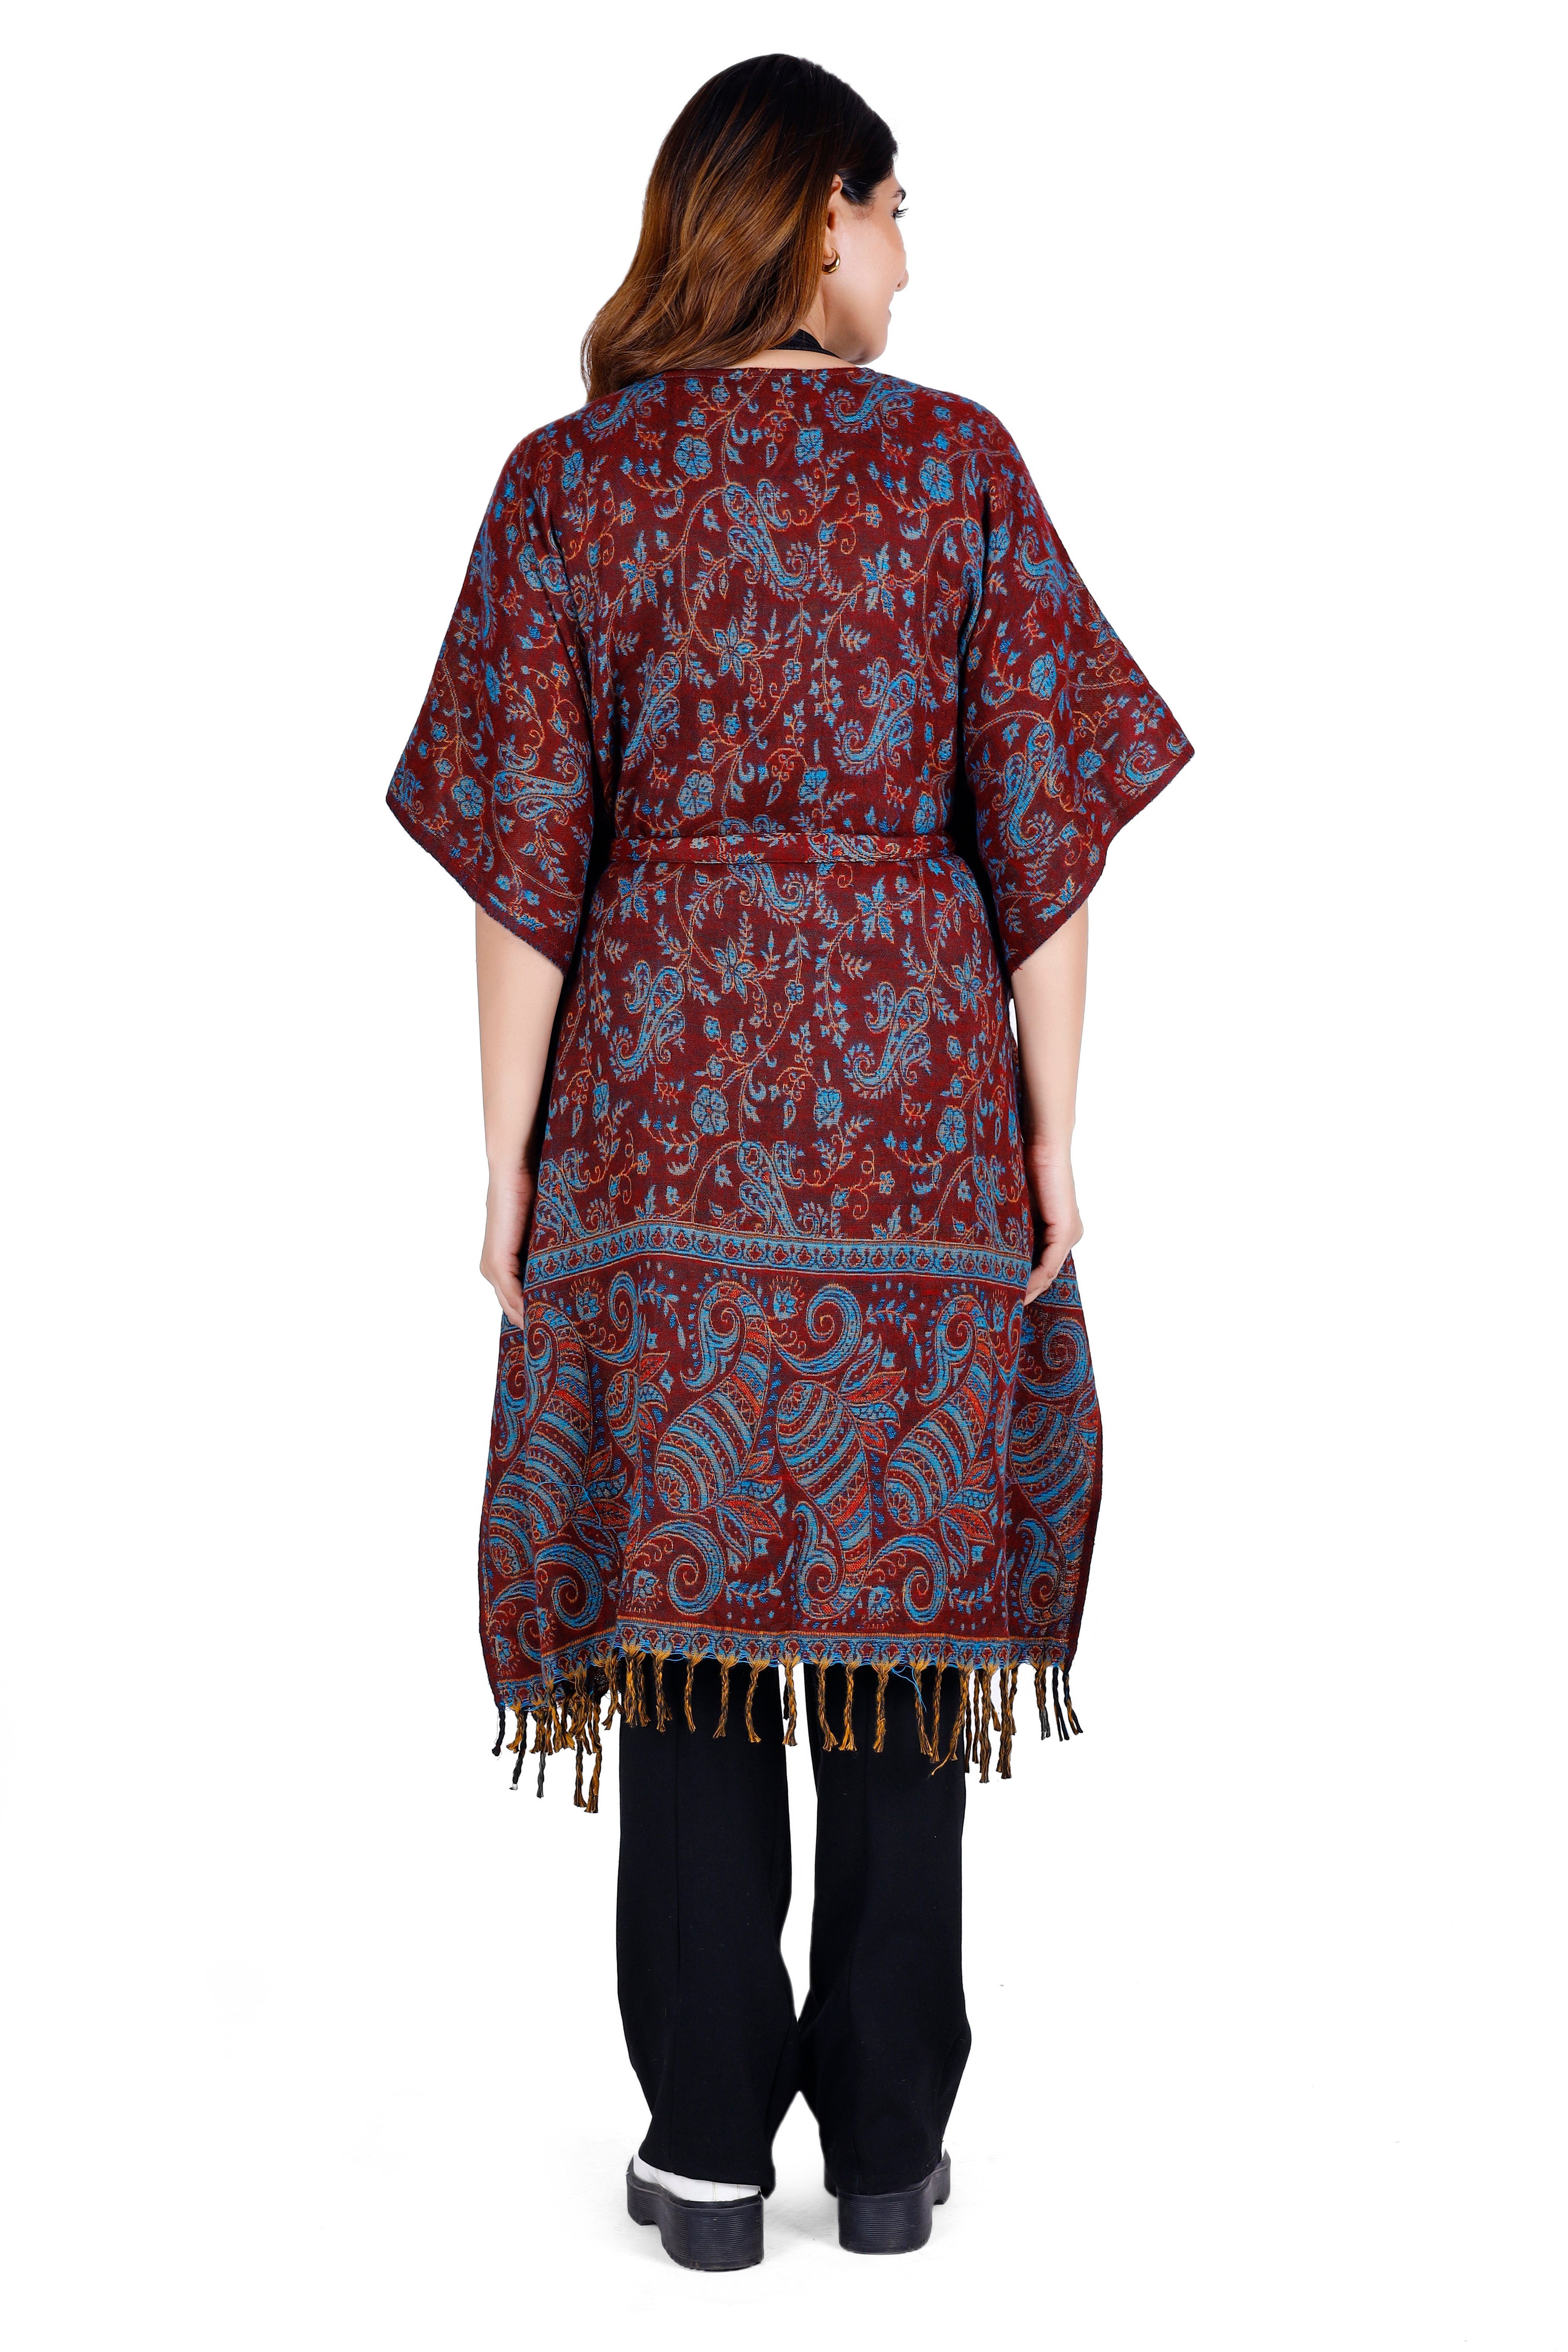 Bekleidung Kimono Kimonokleid, Kaftan,.., alternative Kimono Mantel, Guru-Shop bordeauxrot/blau Flauschiger